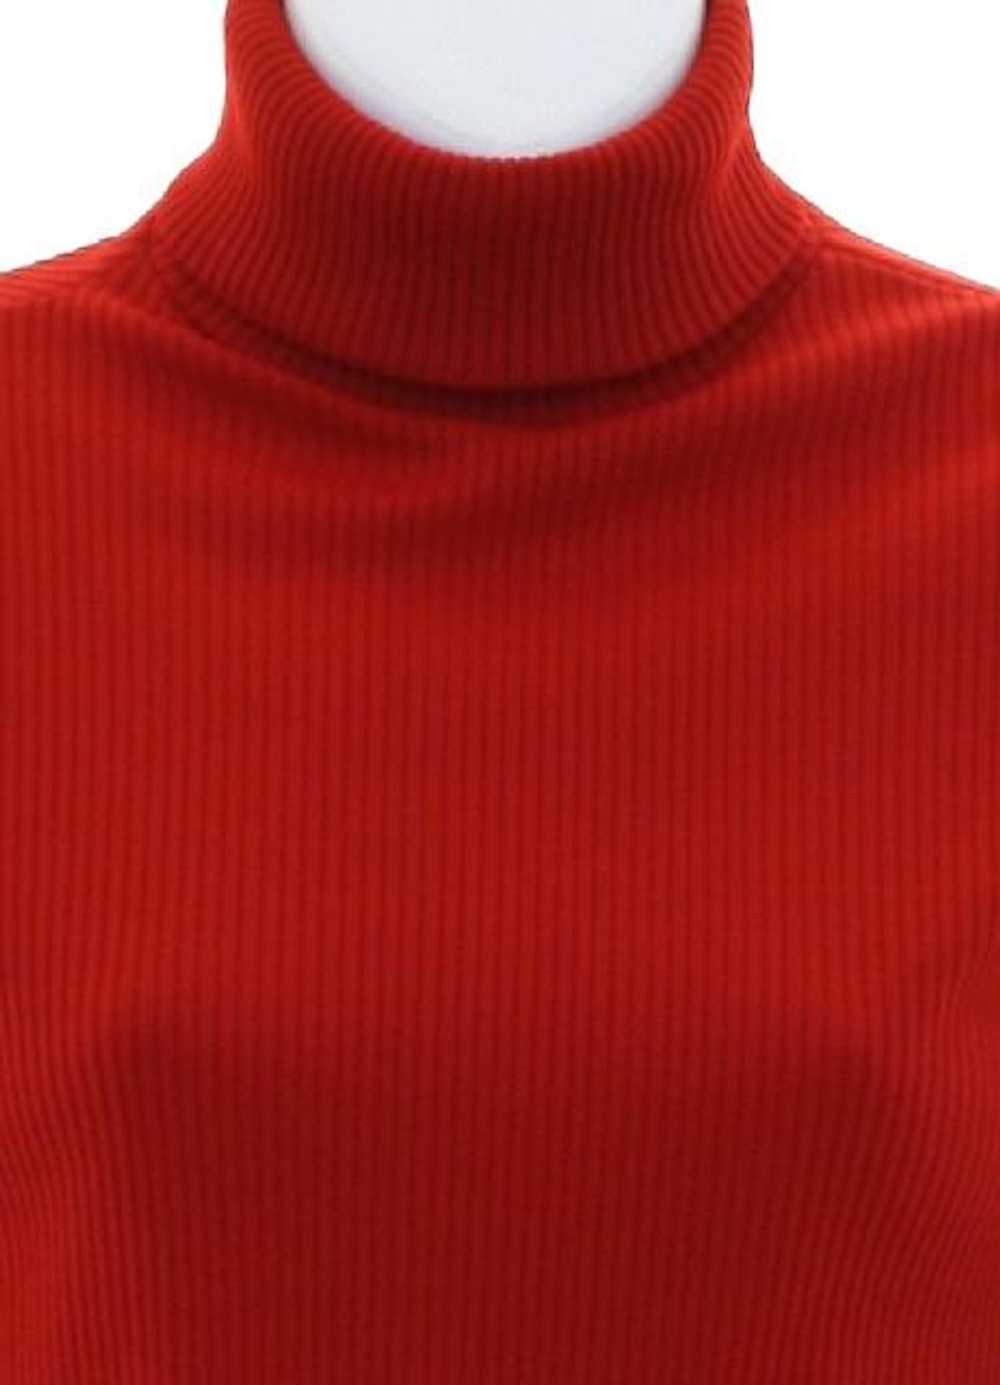 1970's Womens/Girls Mod Knit Shirt - image 2